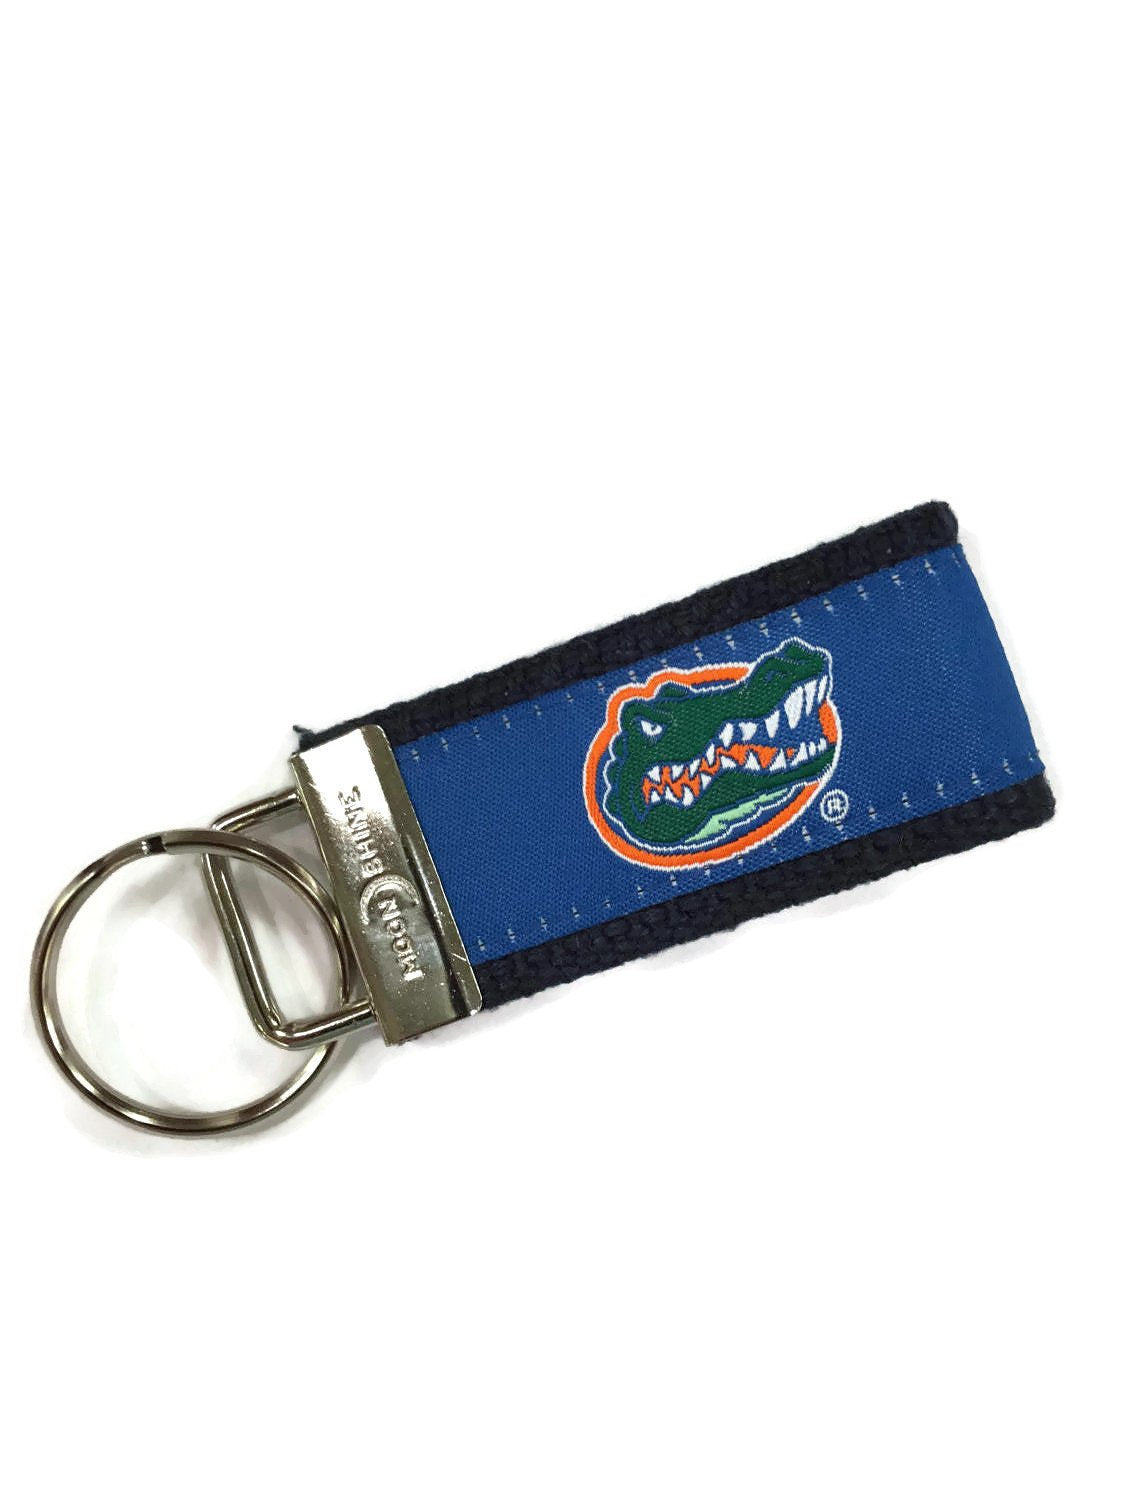 University of Florida Gators web key chains